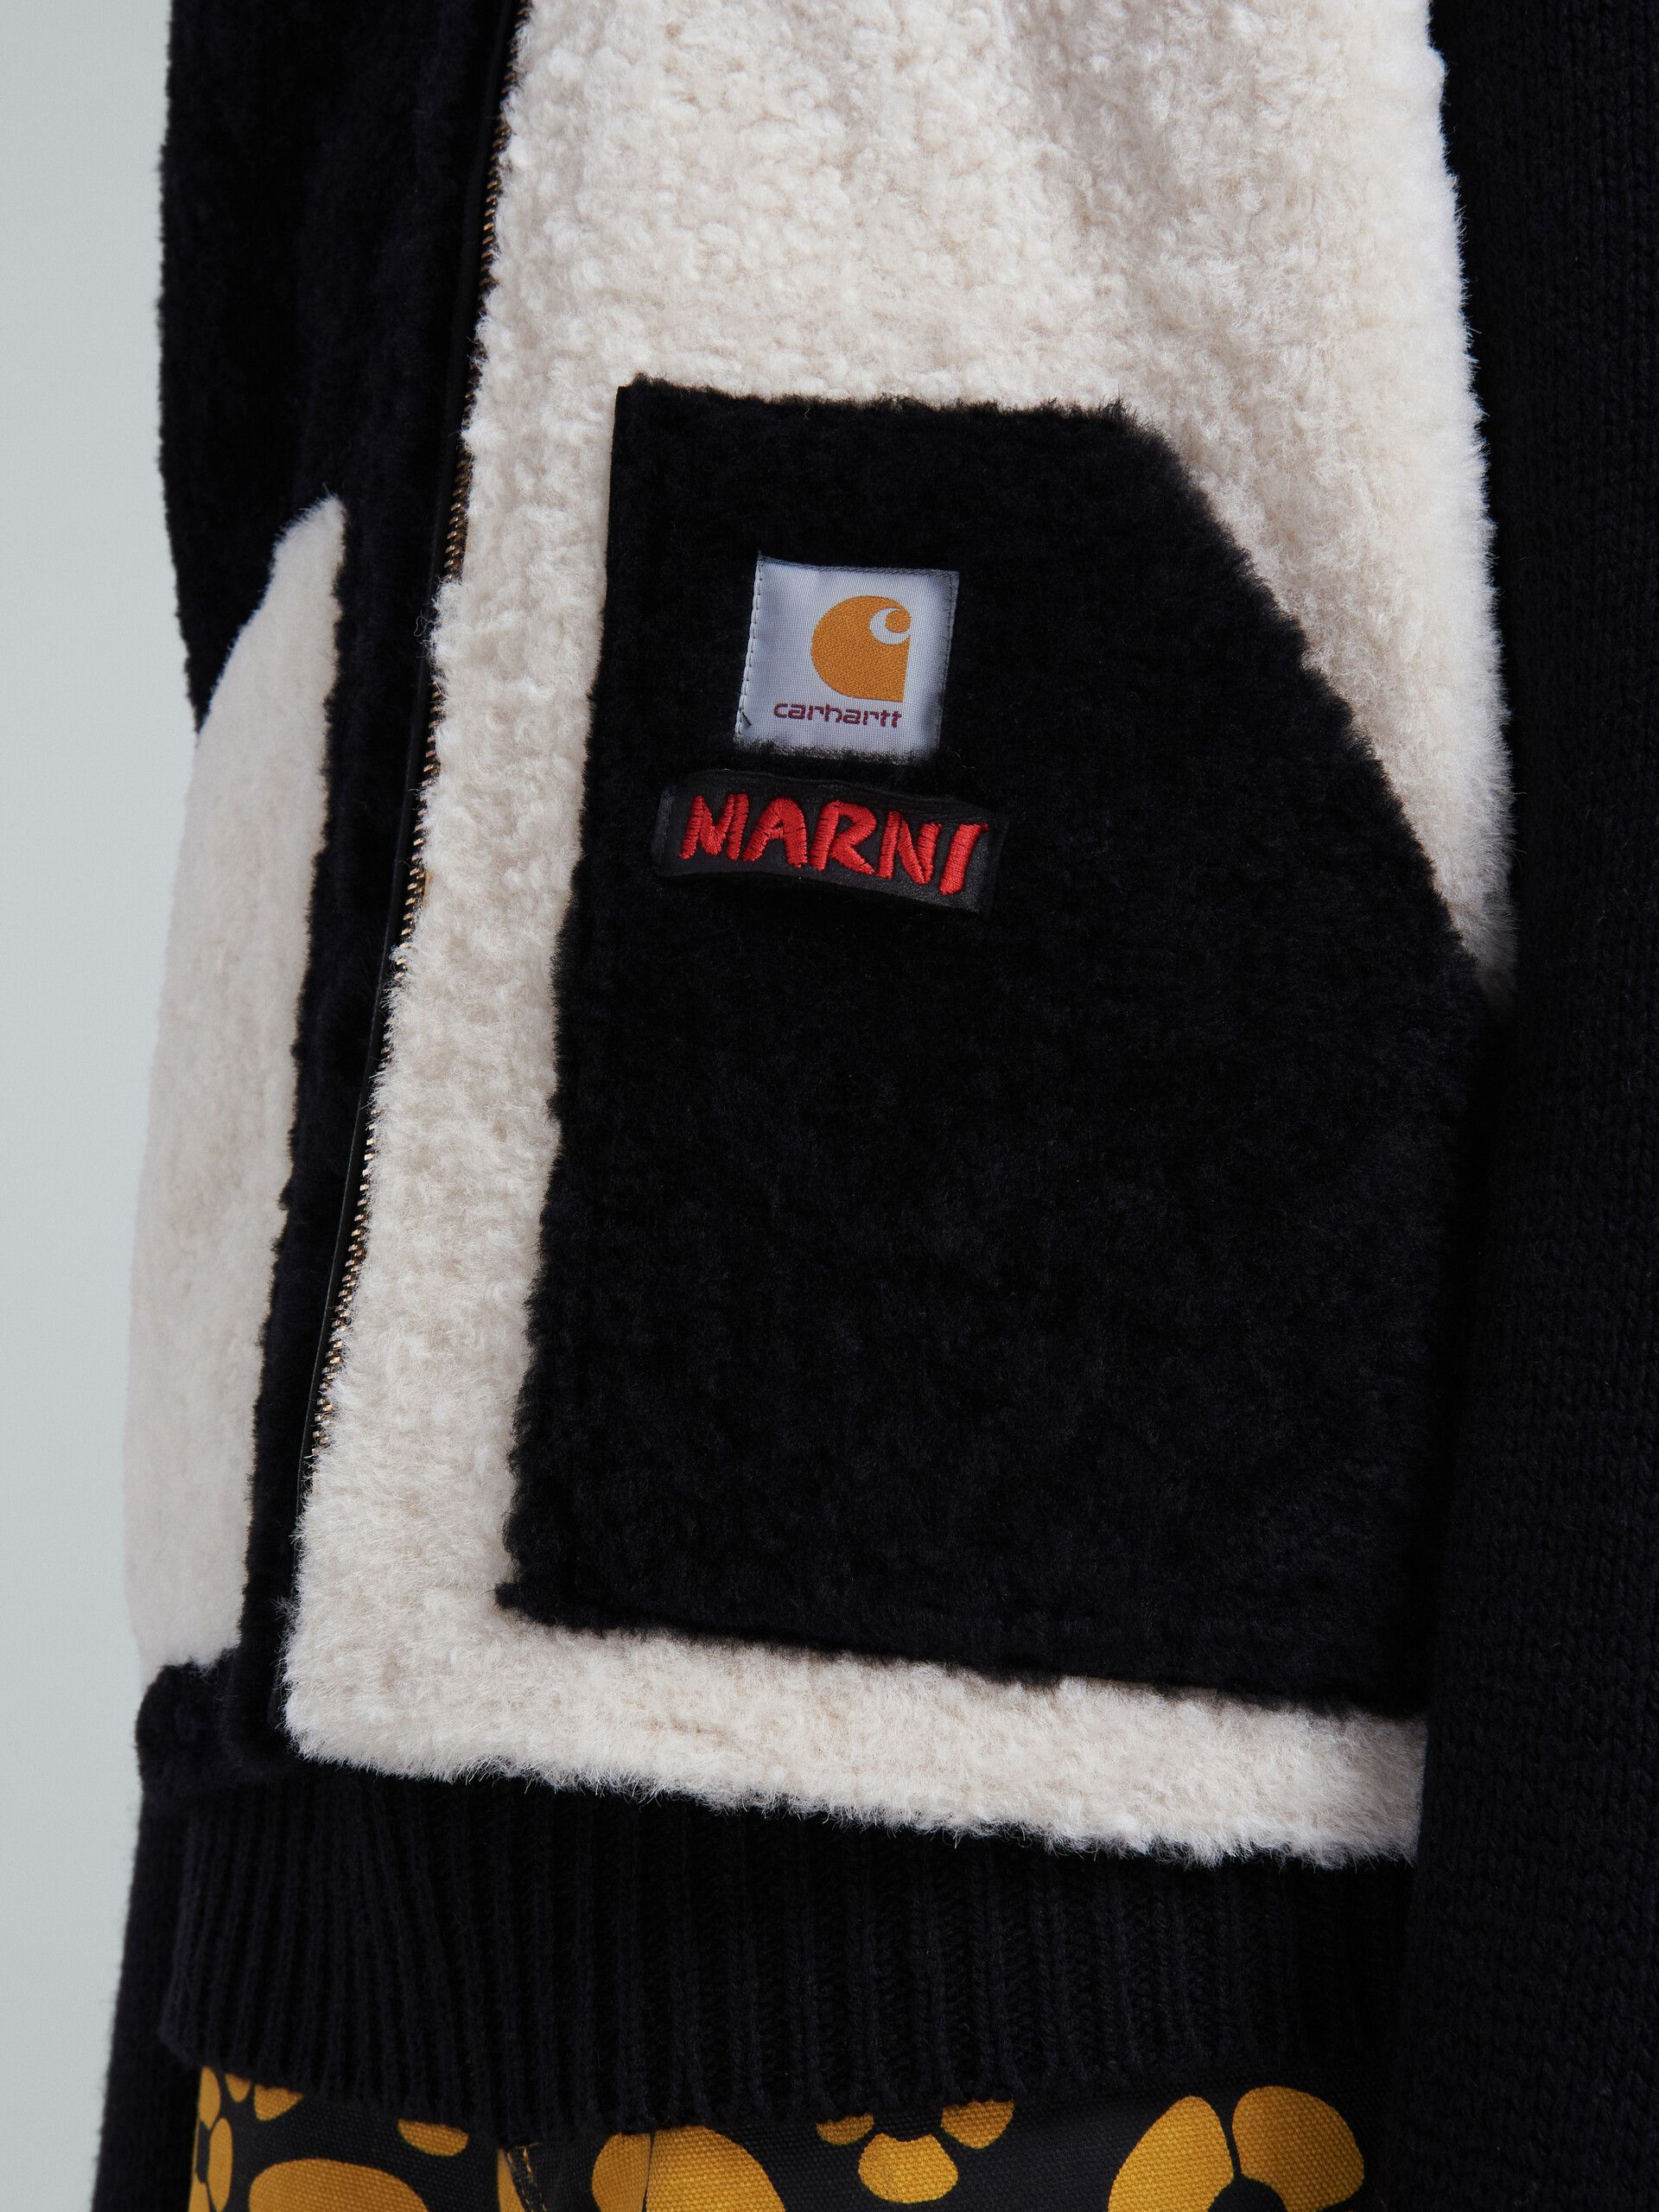 MARNI x CARHARTT WIP - black and white shearling gilet - Waistcoat - Image 5